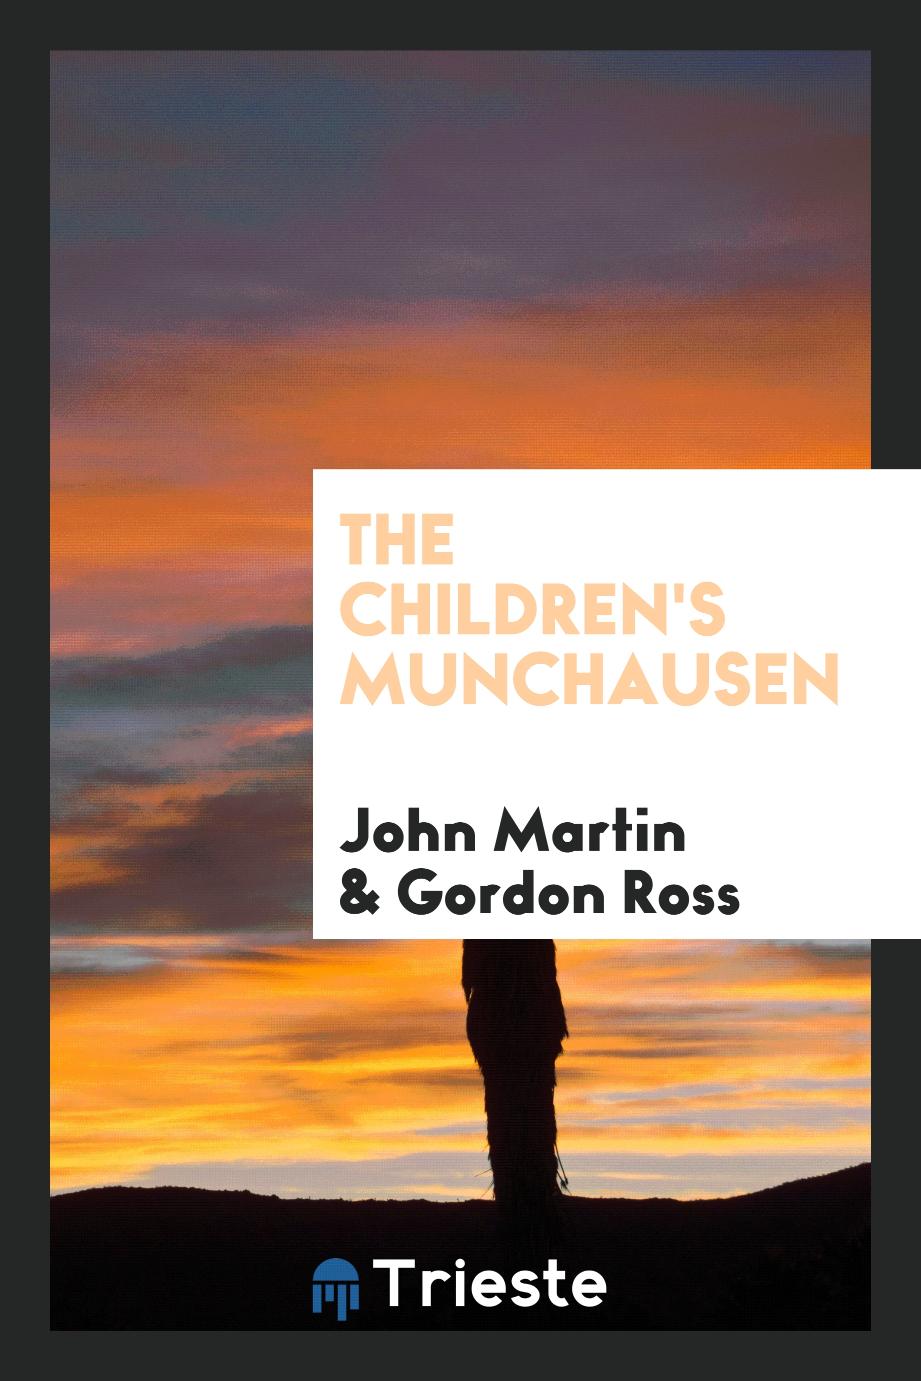 The Children's Munchausen